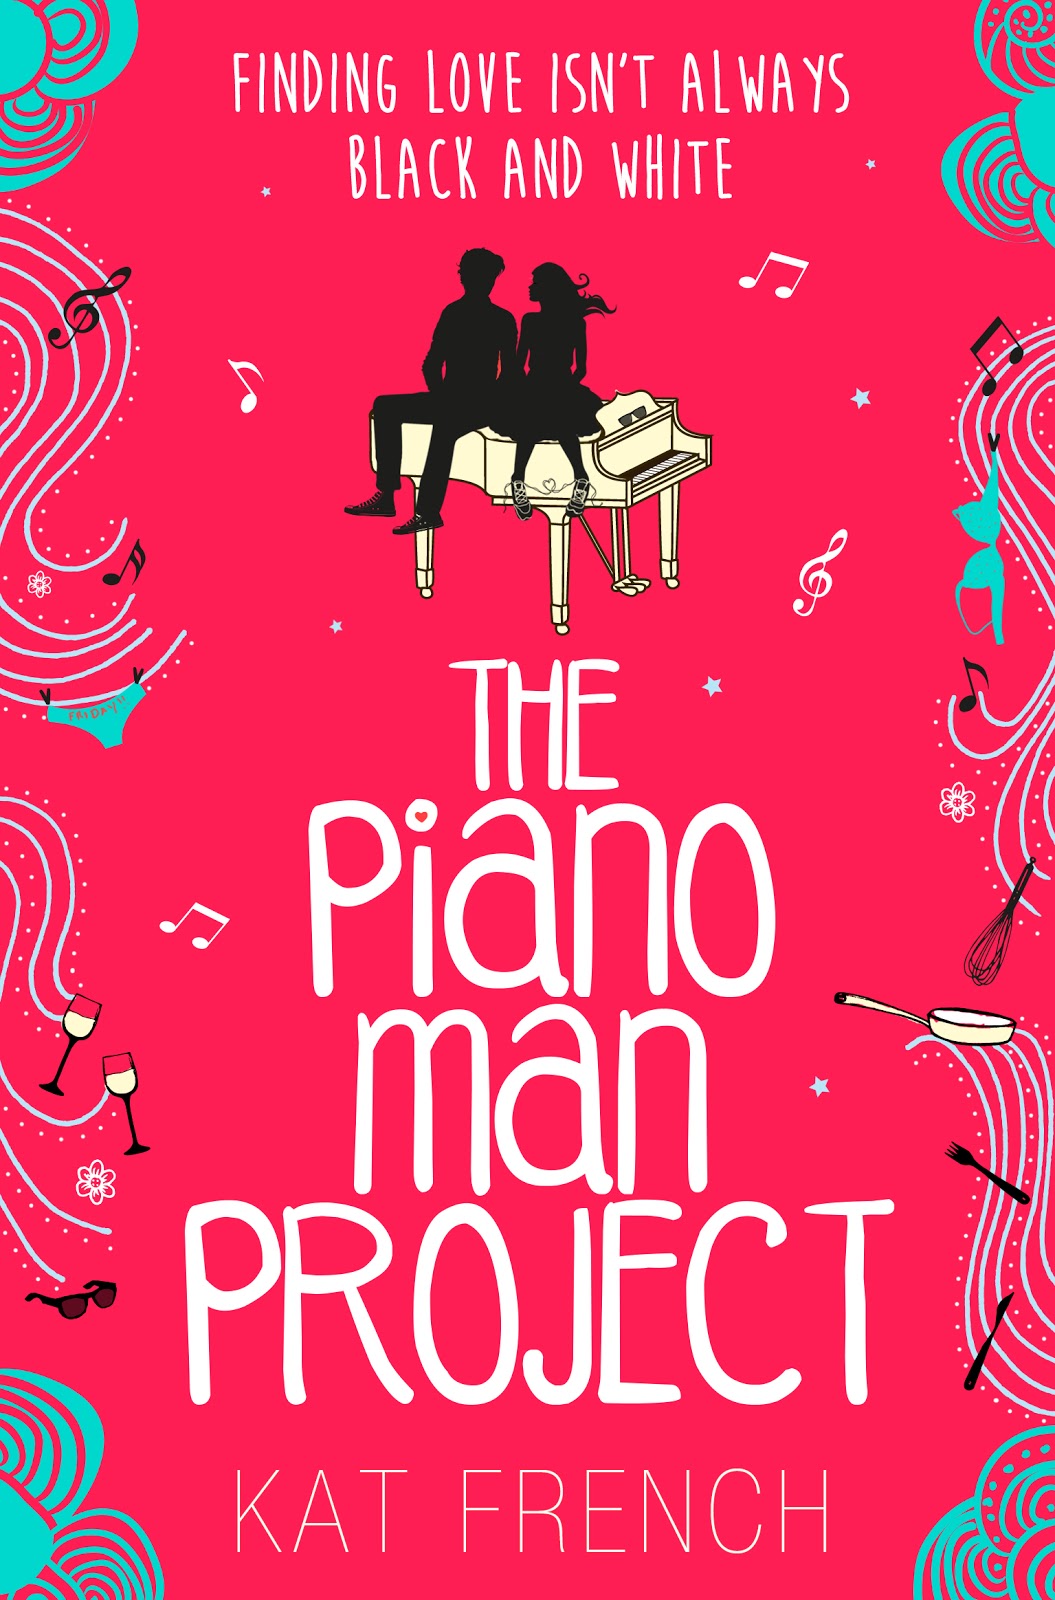 Omitir lavabo Decepcionado Book Review: The Piano Man Project - Samantha Kilford